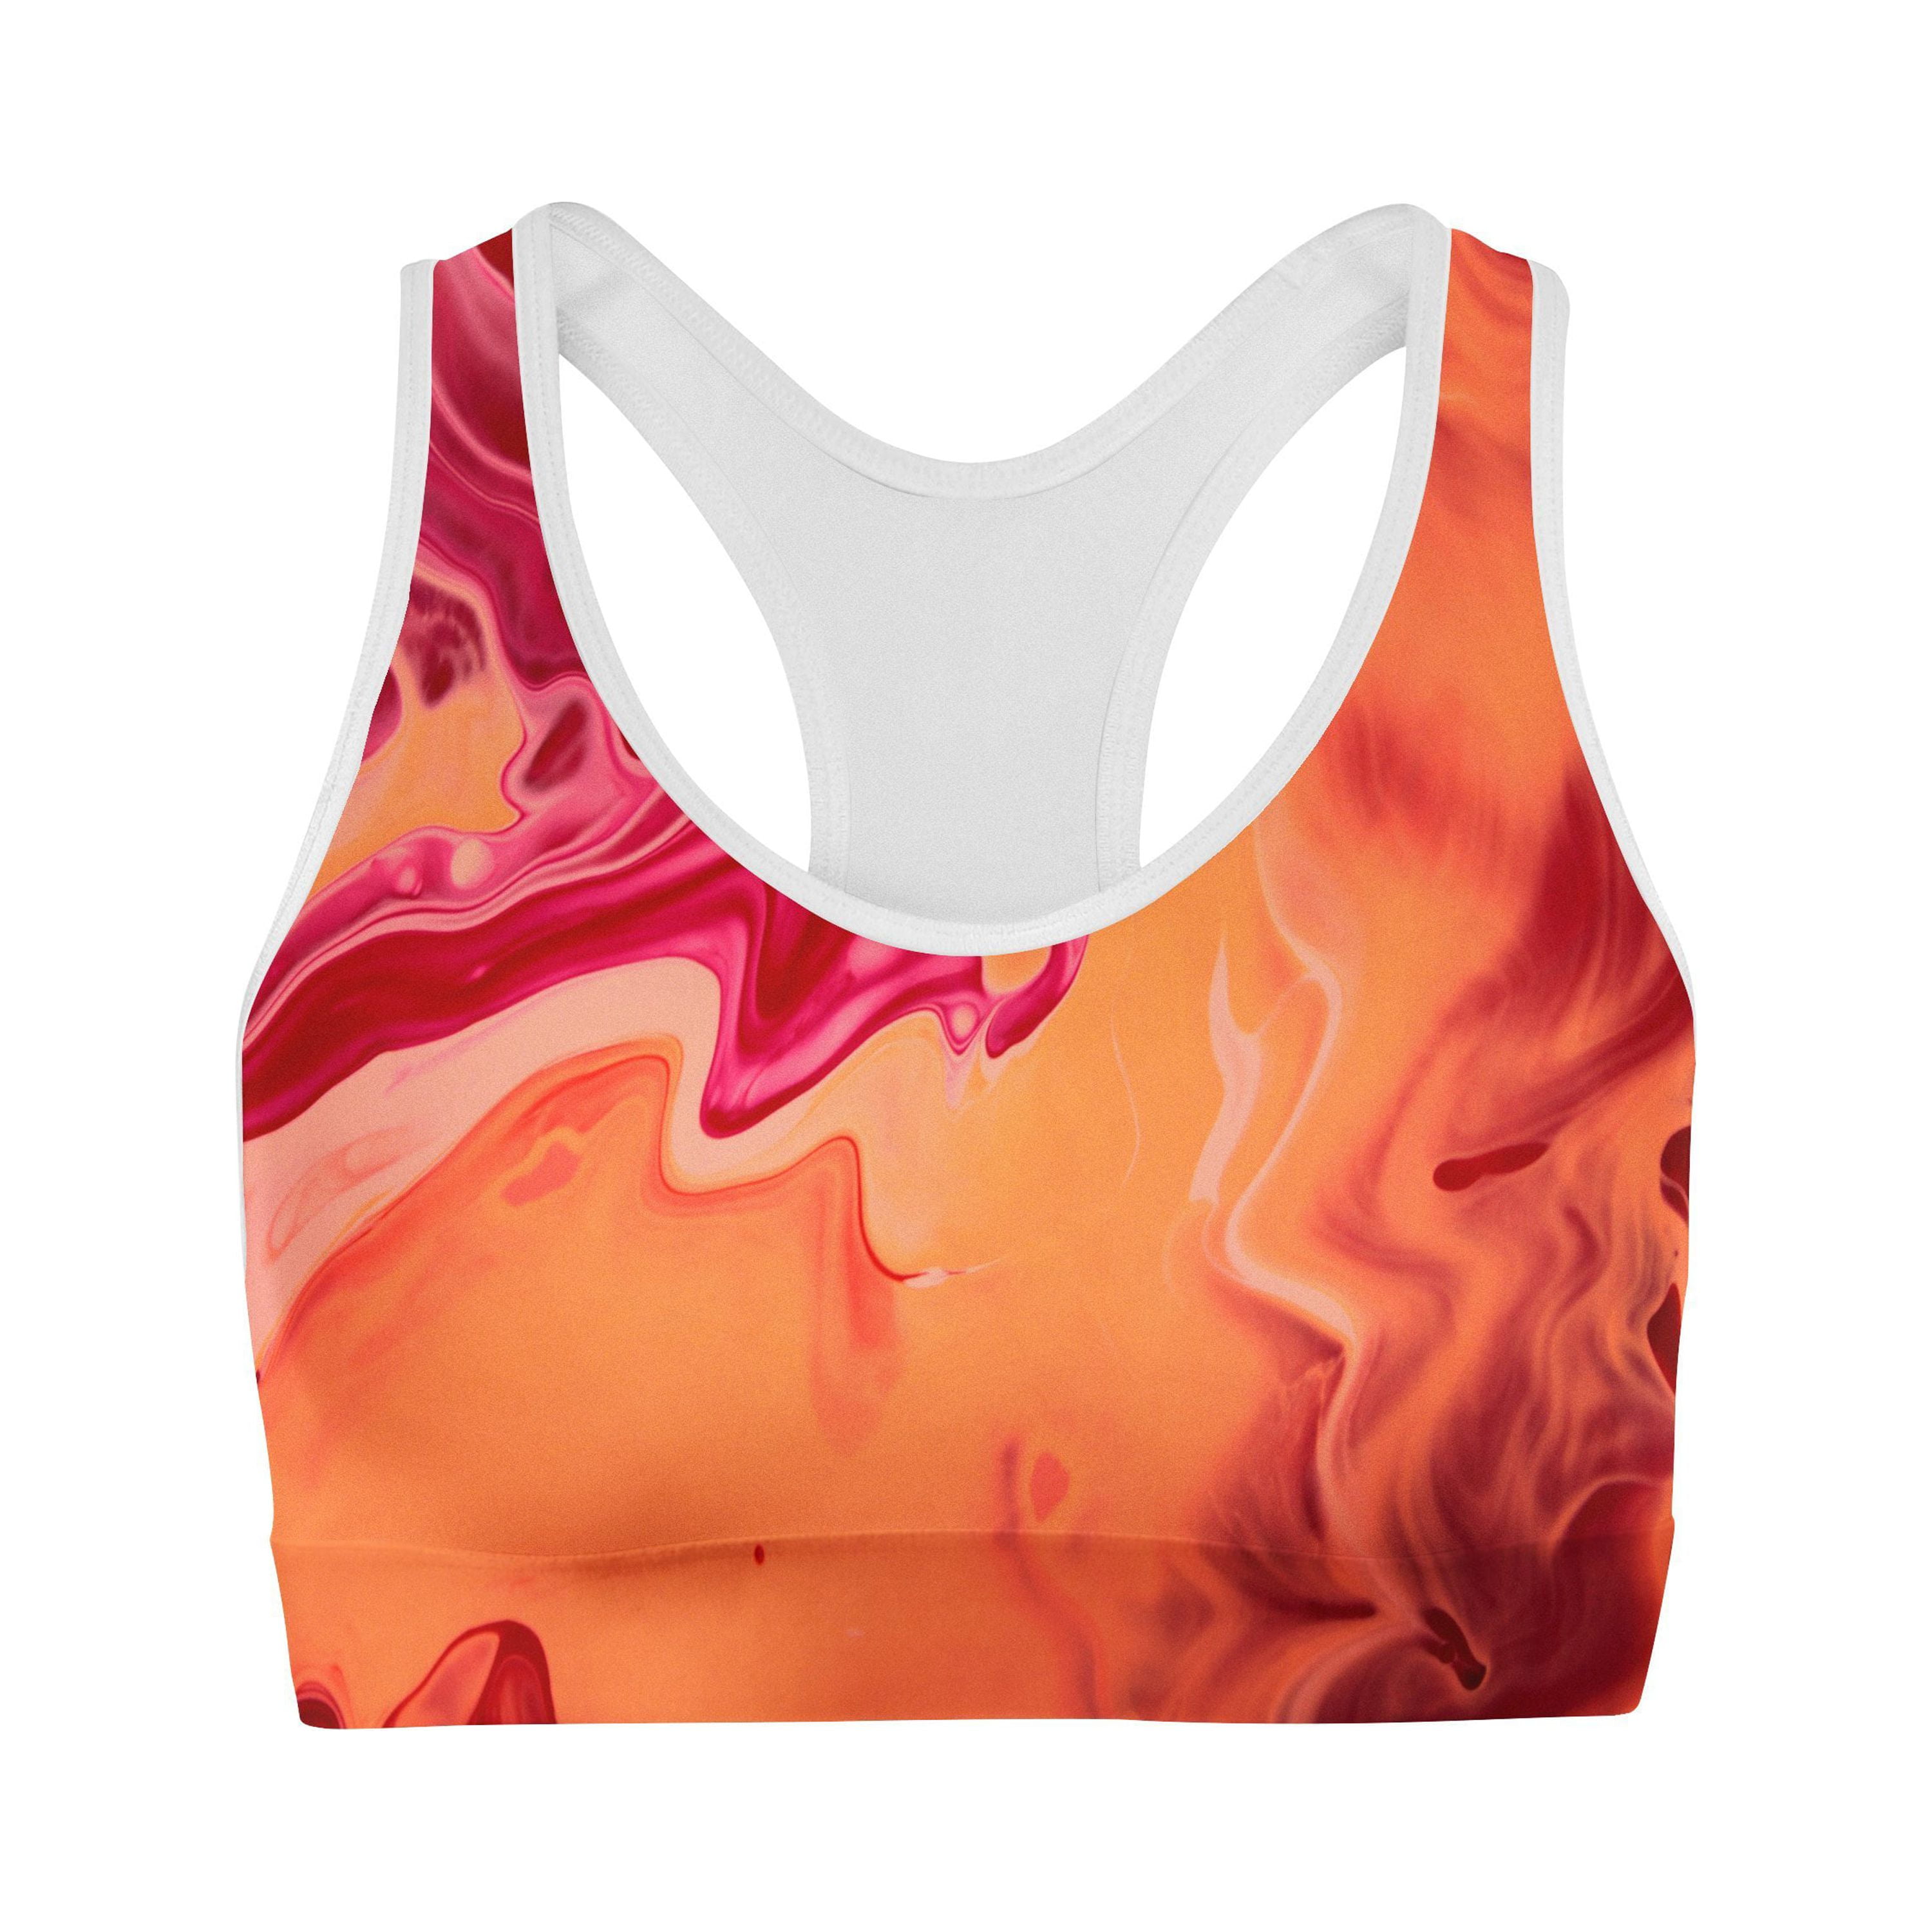 USA Made Women's Sports Bra For Women, Orange, 100% Lycra Fabric